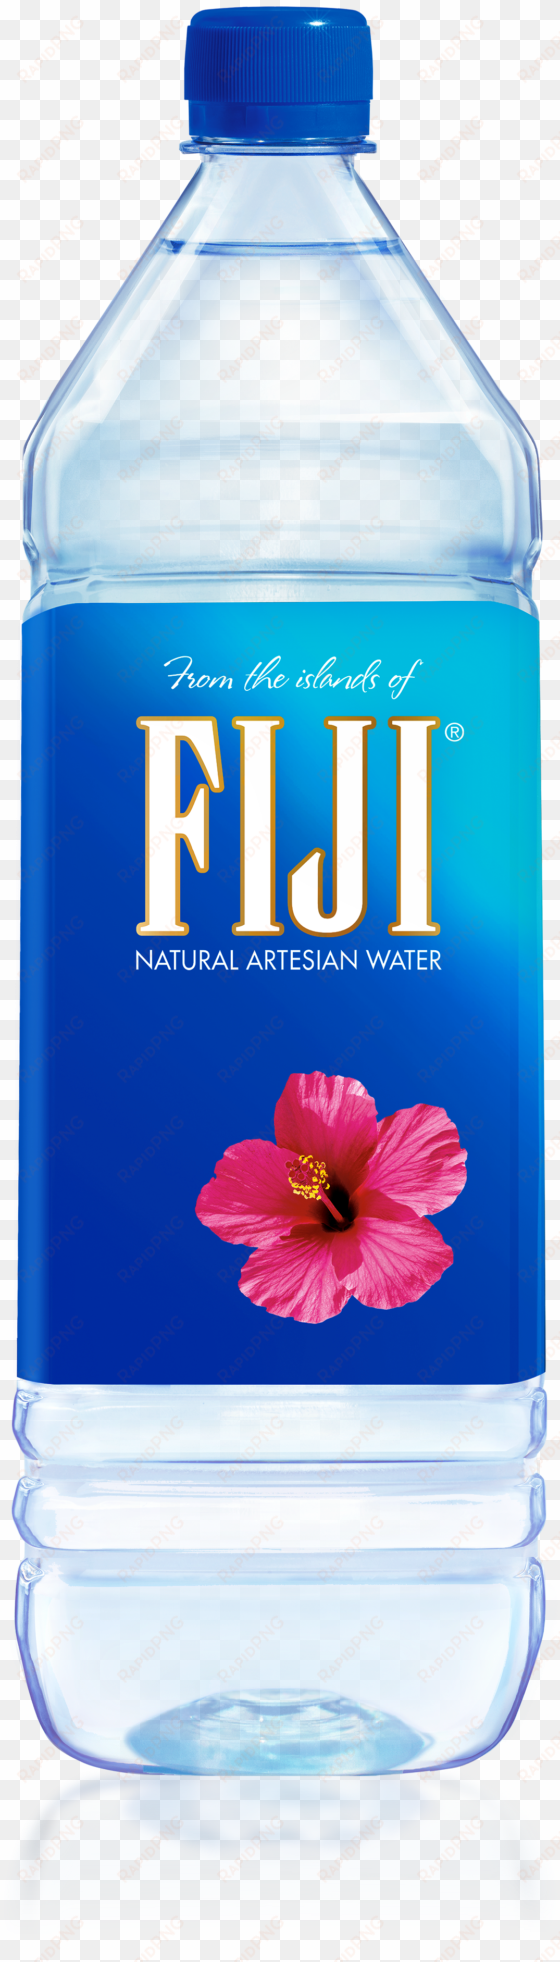 fiji natural artesian water, - fiji water bottle